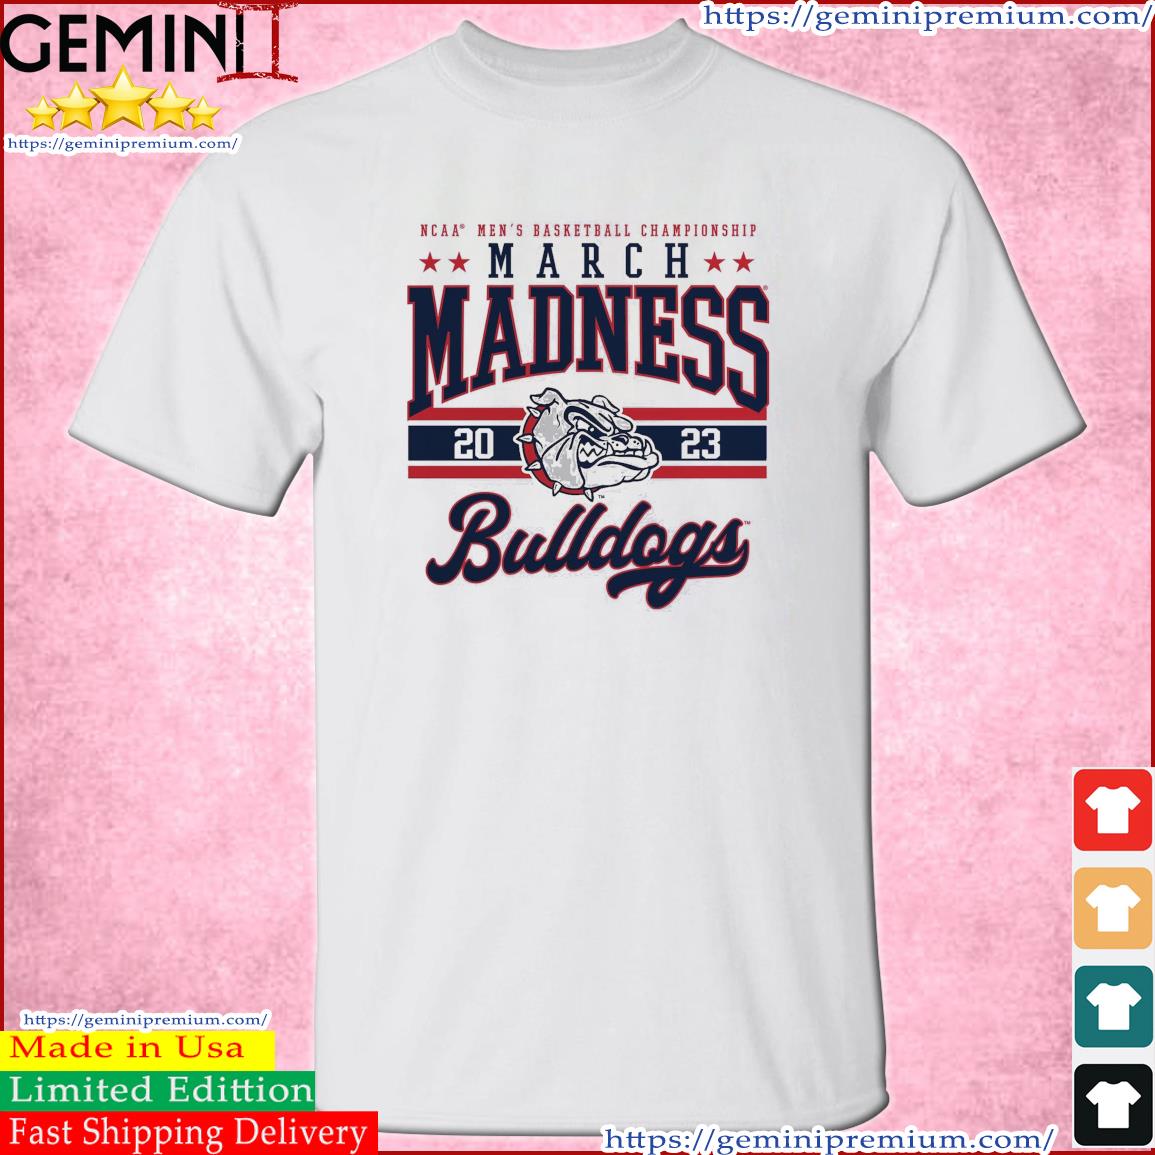 Gonzaga Bulldogs NCAA Men's Basketball Tournament March Madness 2023 Shirt